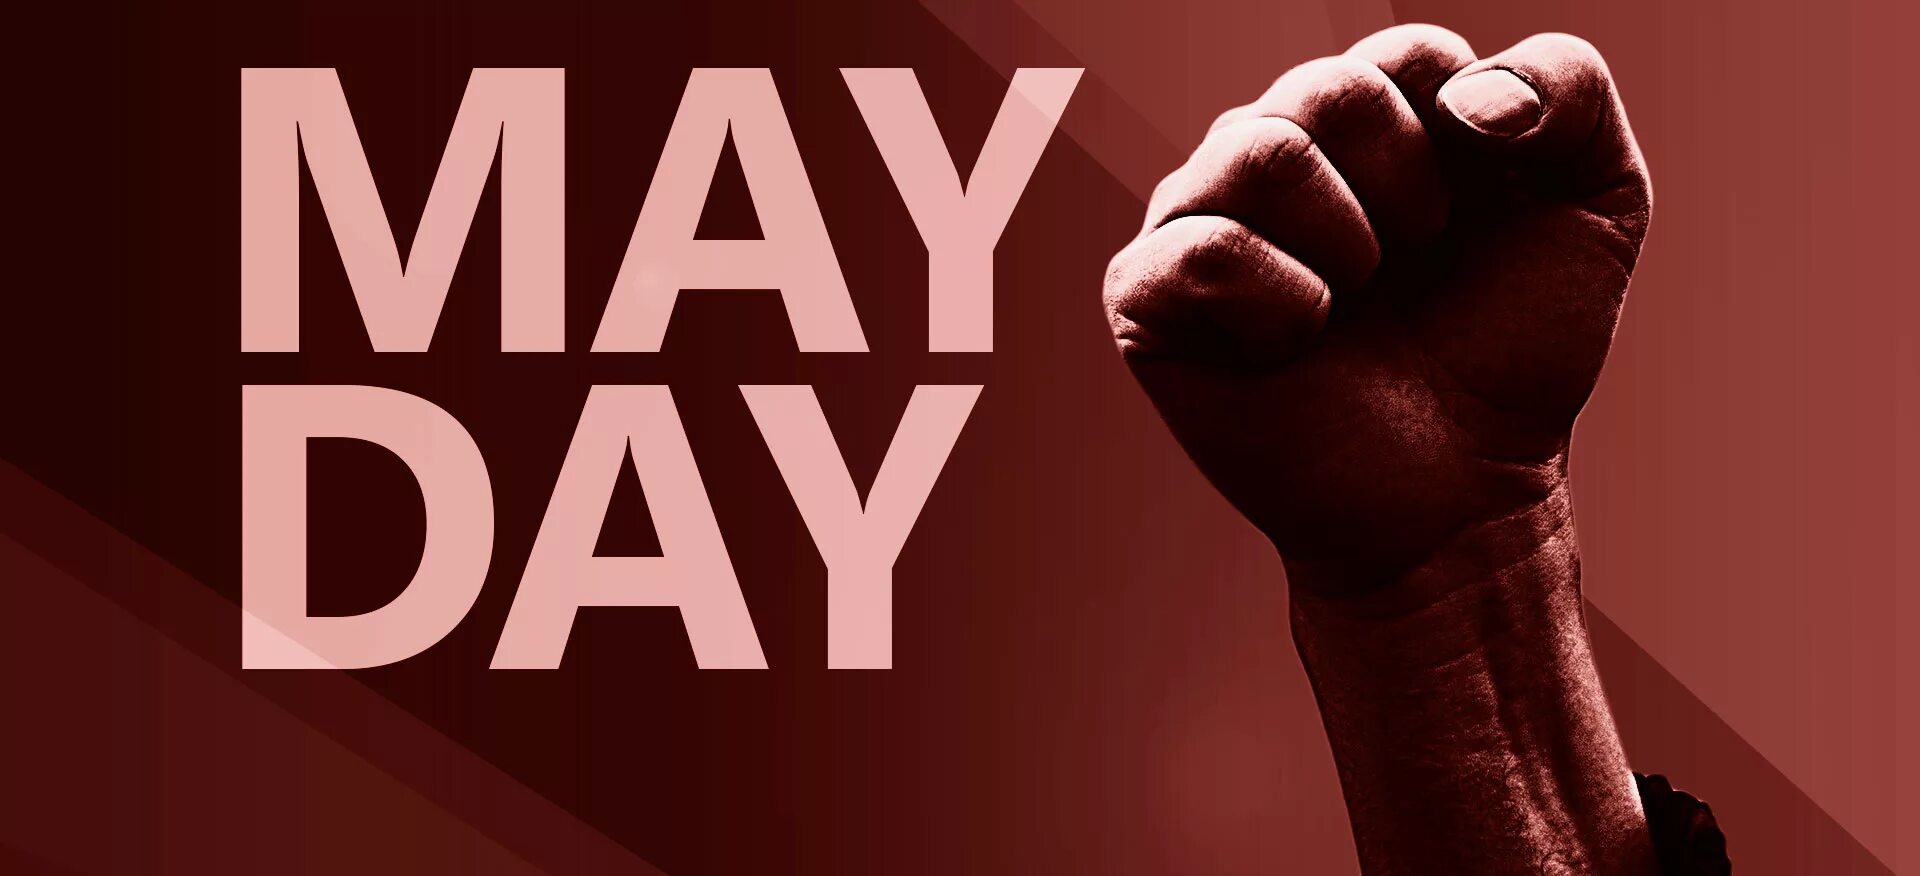 Happy may day. May Day. Лабор дей. 1 May Day. Мэй Дэй картинки.